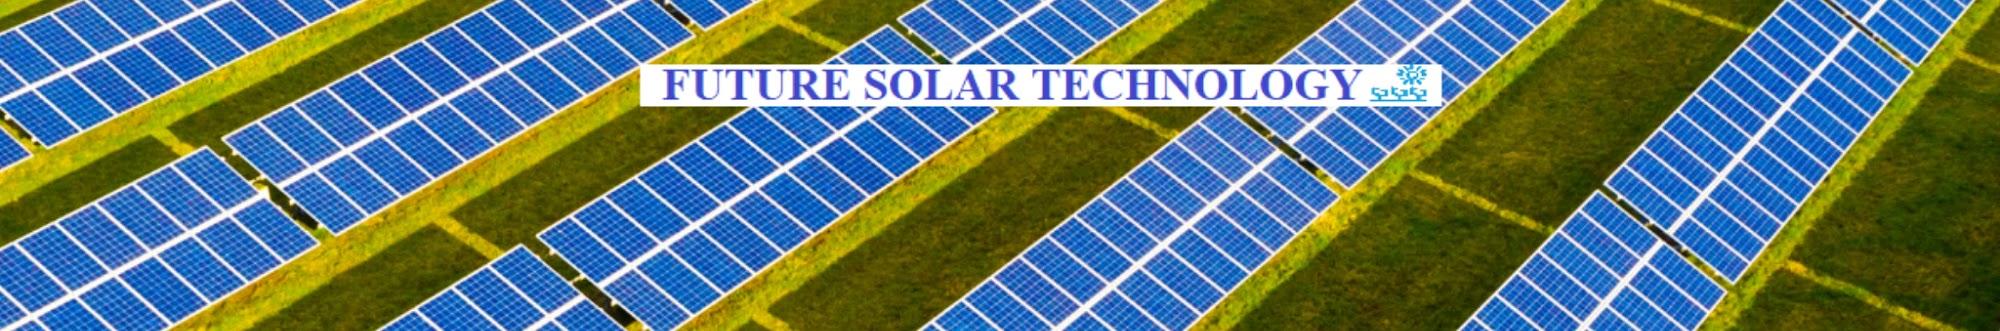 FUTURE SOLAR TECHNOLOGY 